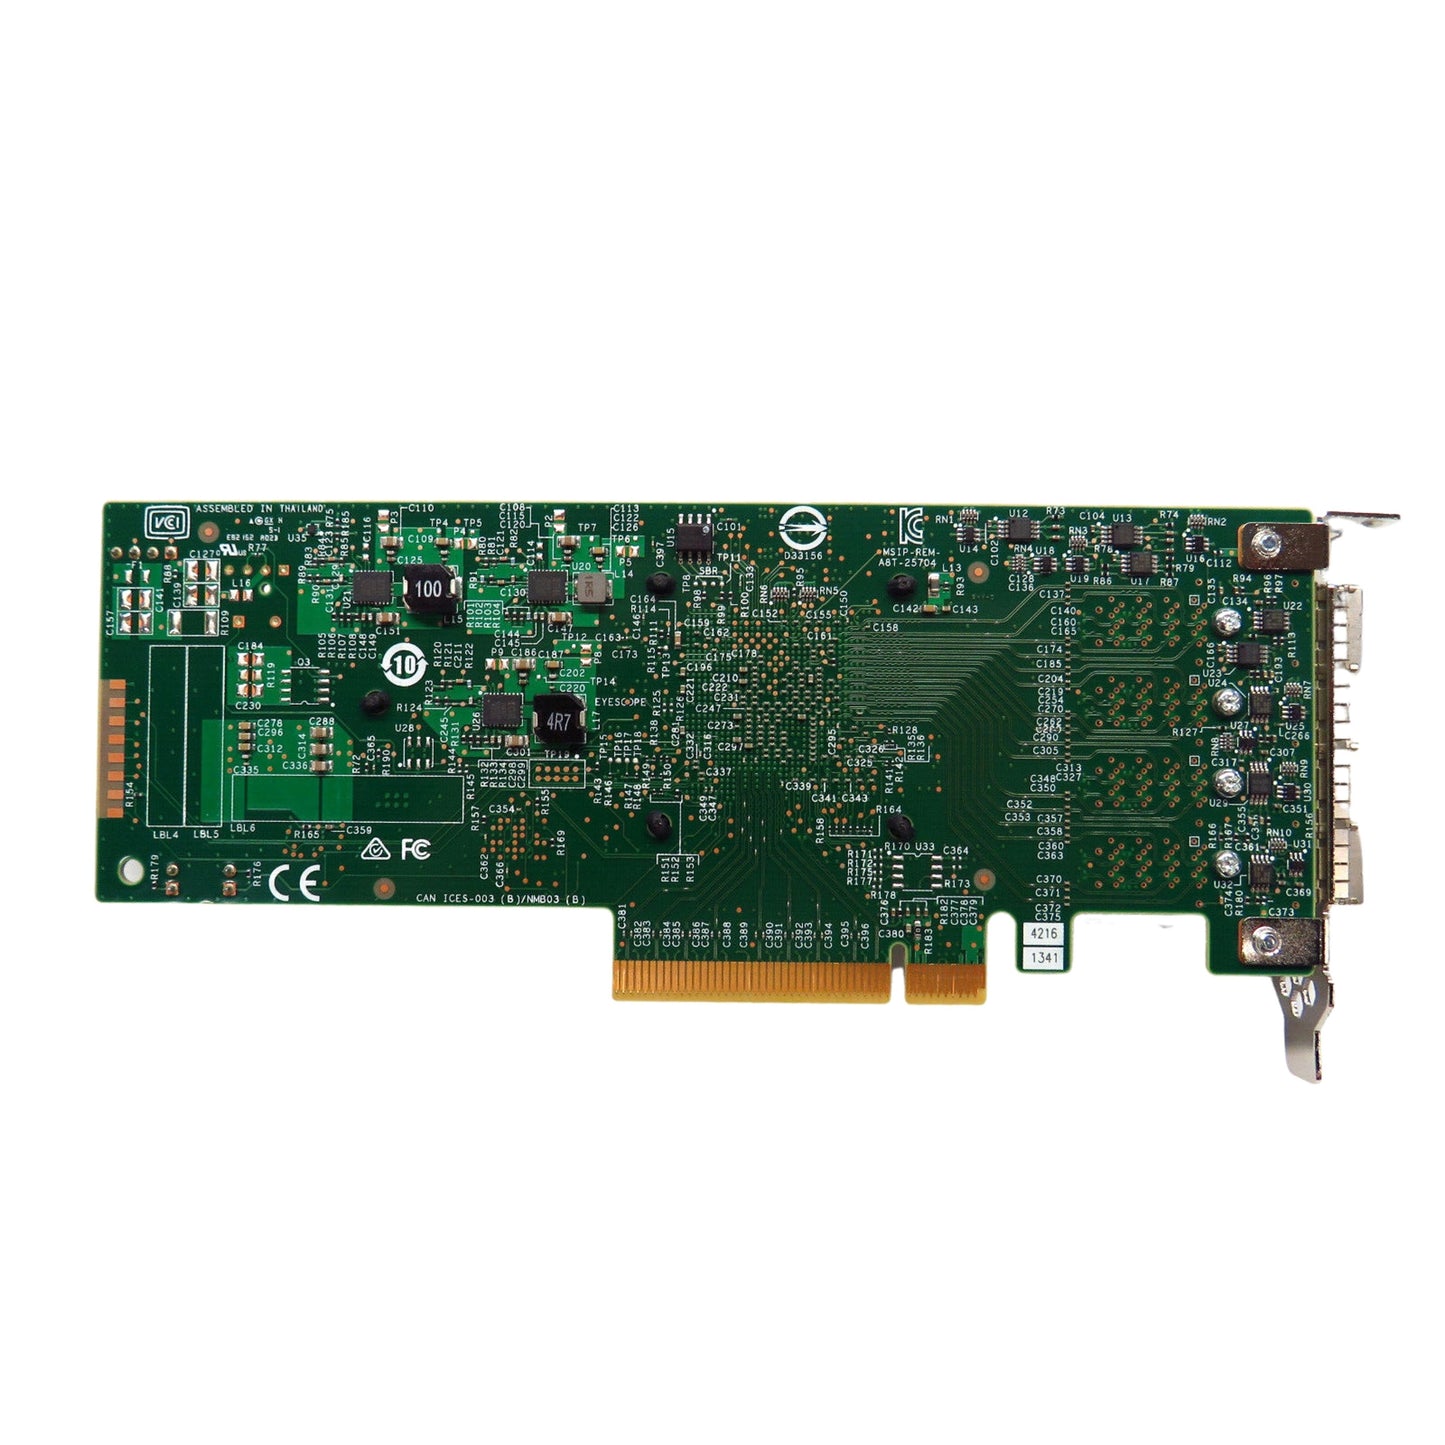 Avago SAS9305-16e 4 Port SAS 12Gbps HBA Host Bus Adapter Card (Refurbished)